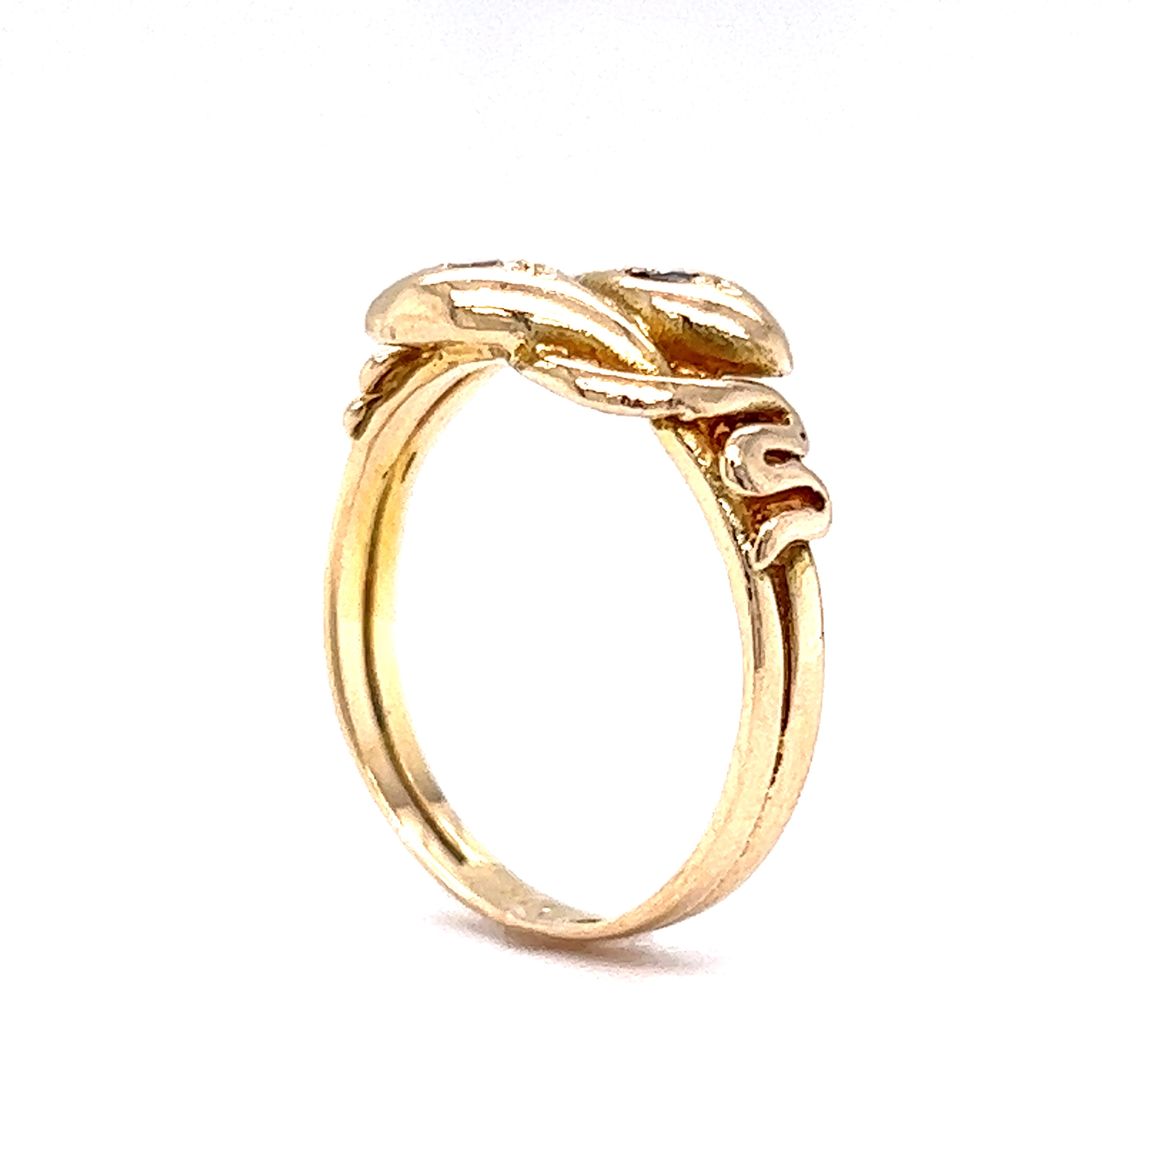 Victorian Diamond & Sapphire Snake Ring in 14k Yellow Gold